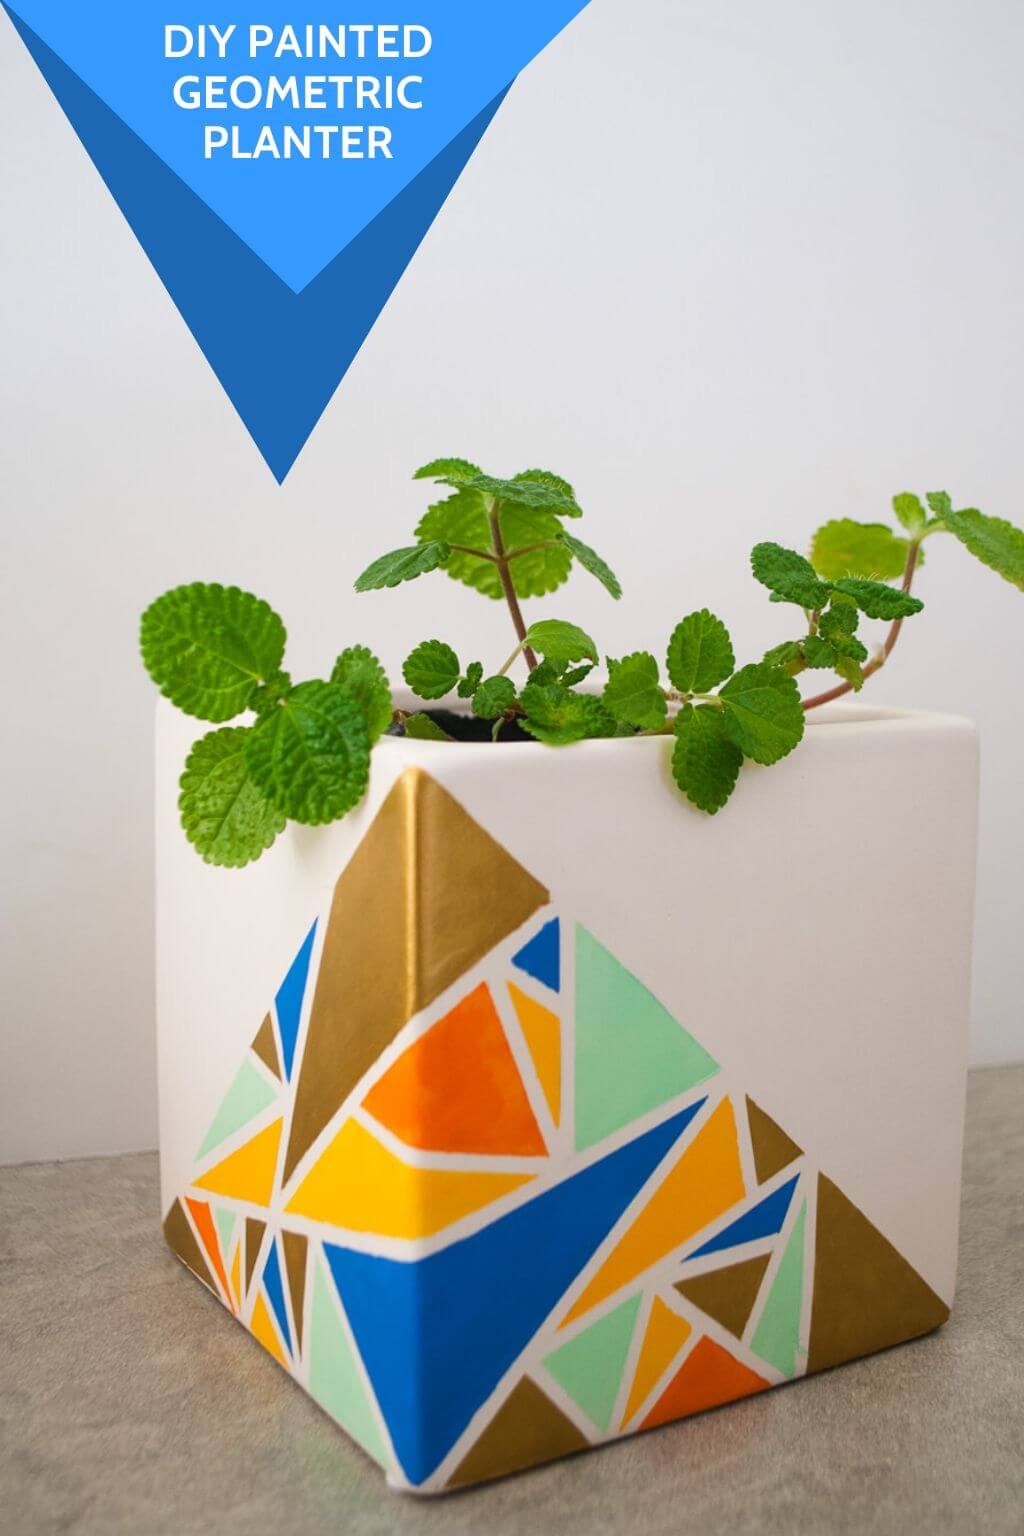 Geometric Painted Pots Easy DIY Idea - Merriment Design